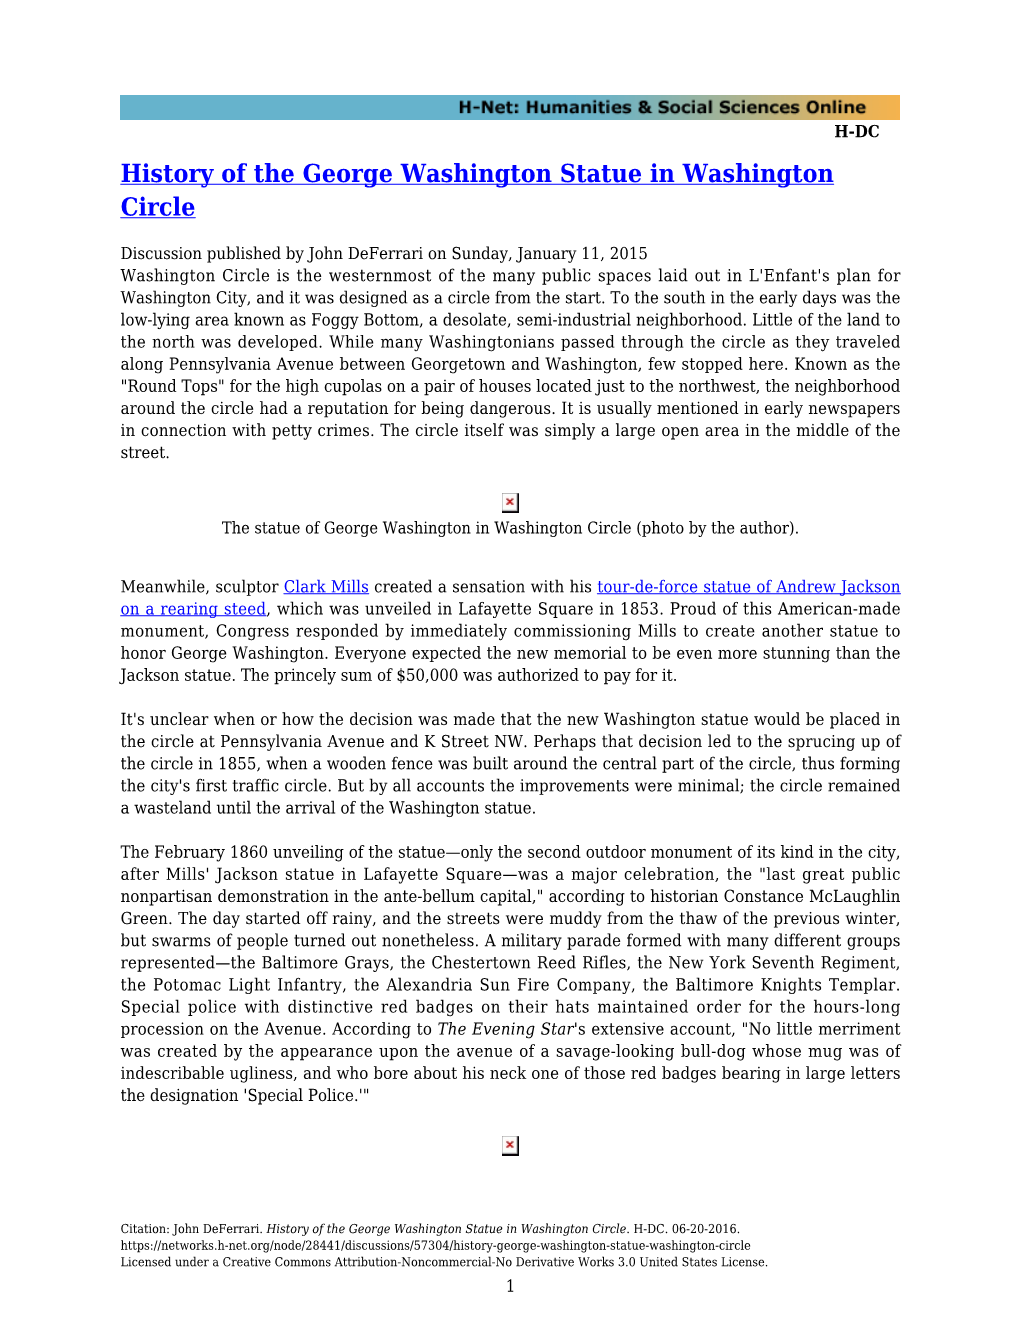 History of the George Washington Statue in Washington Circle